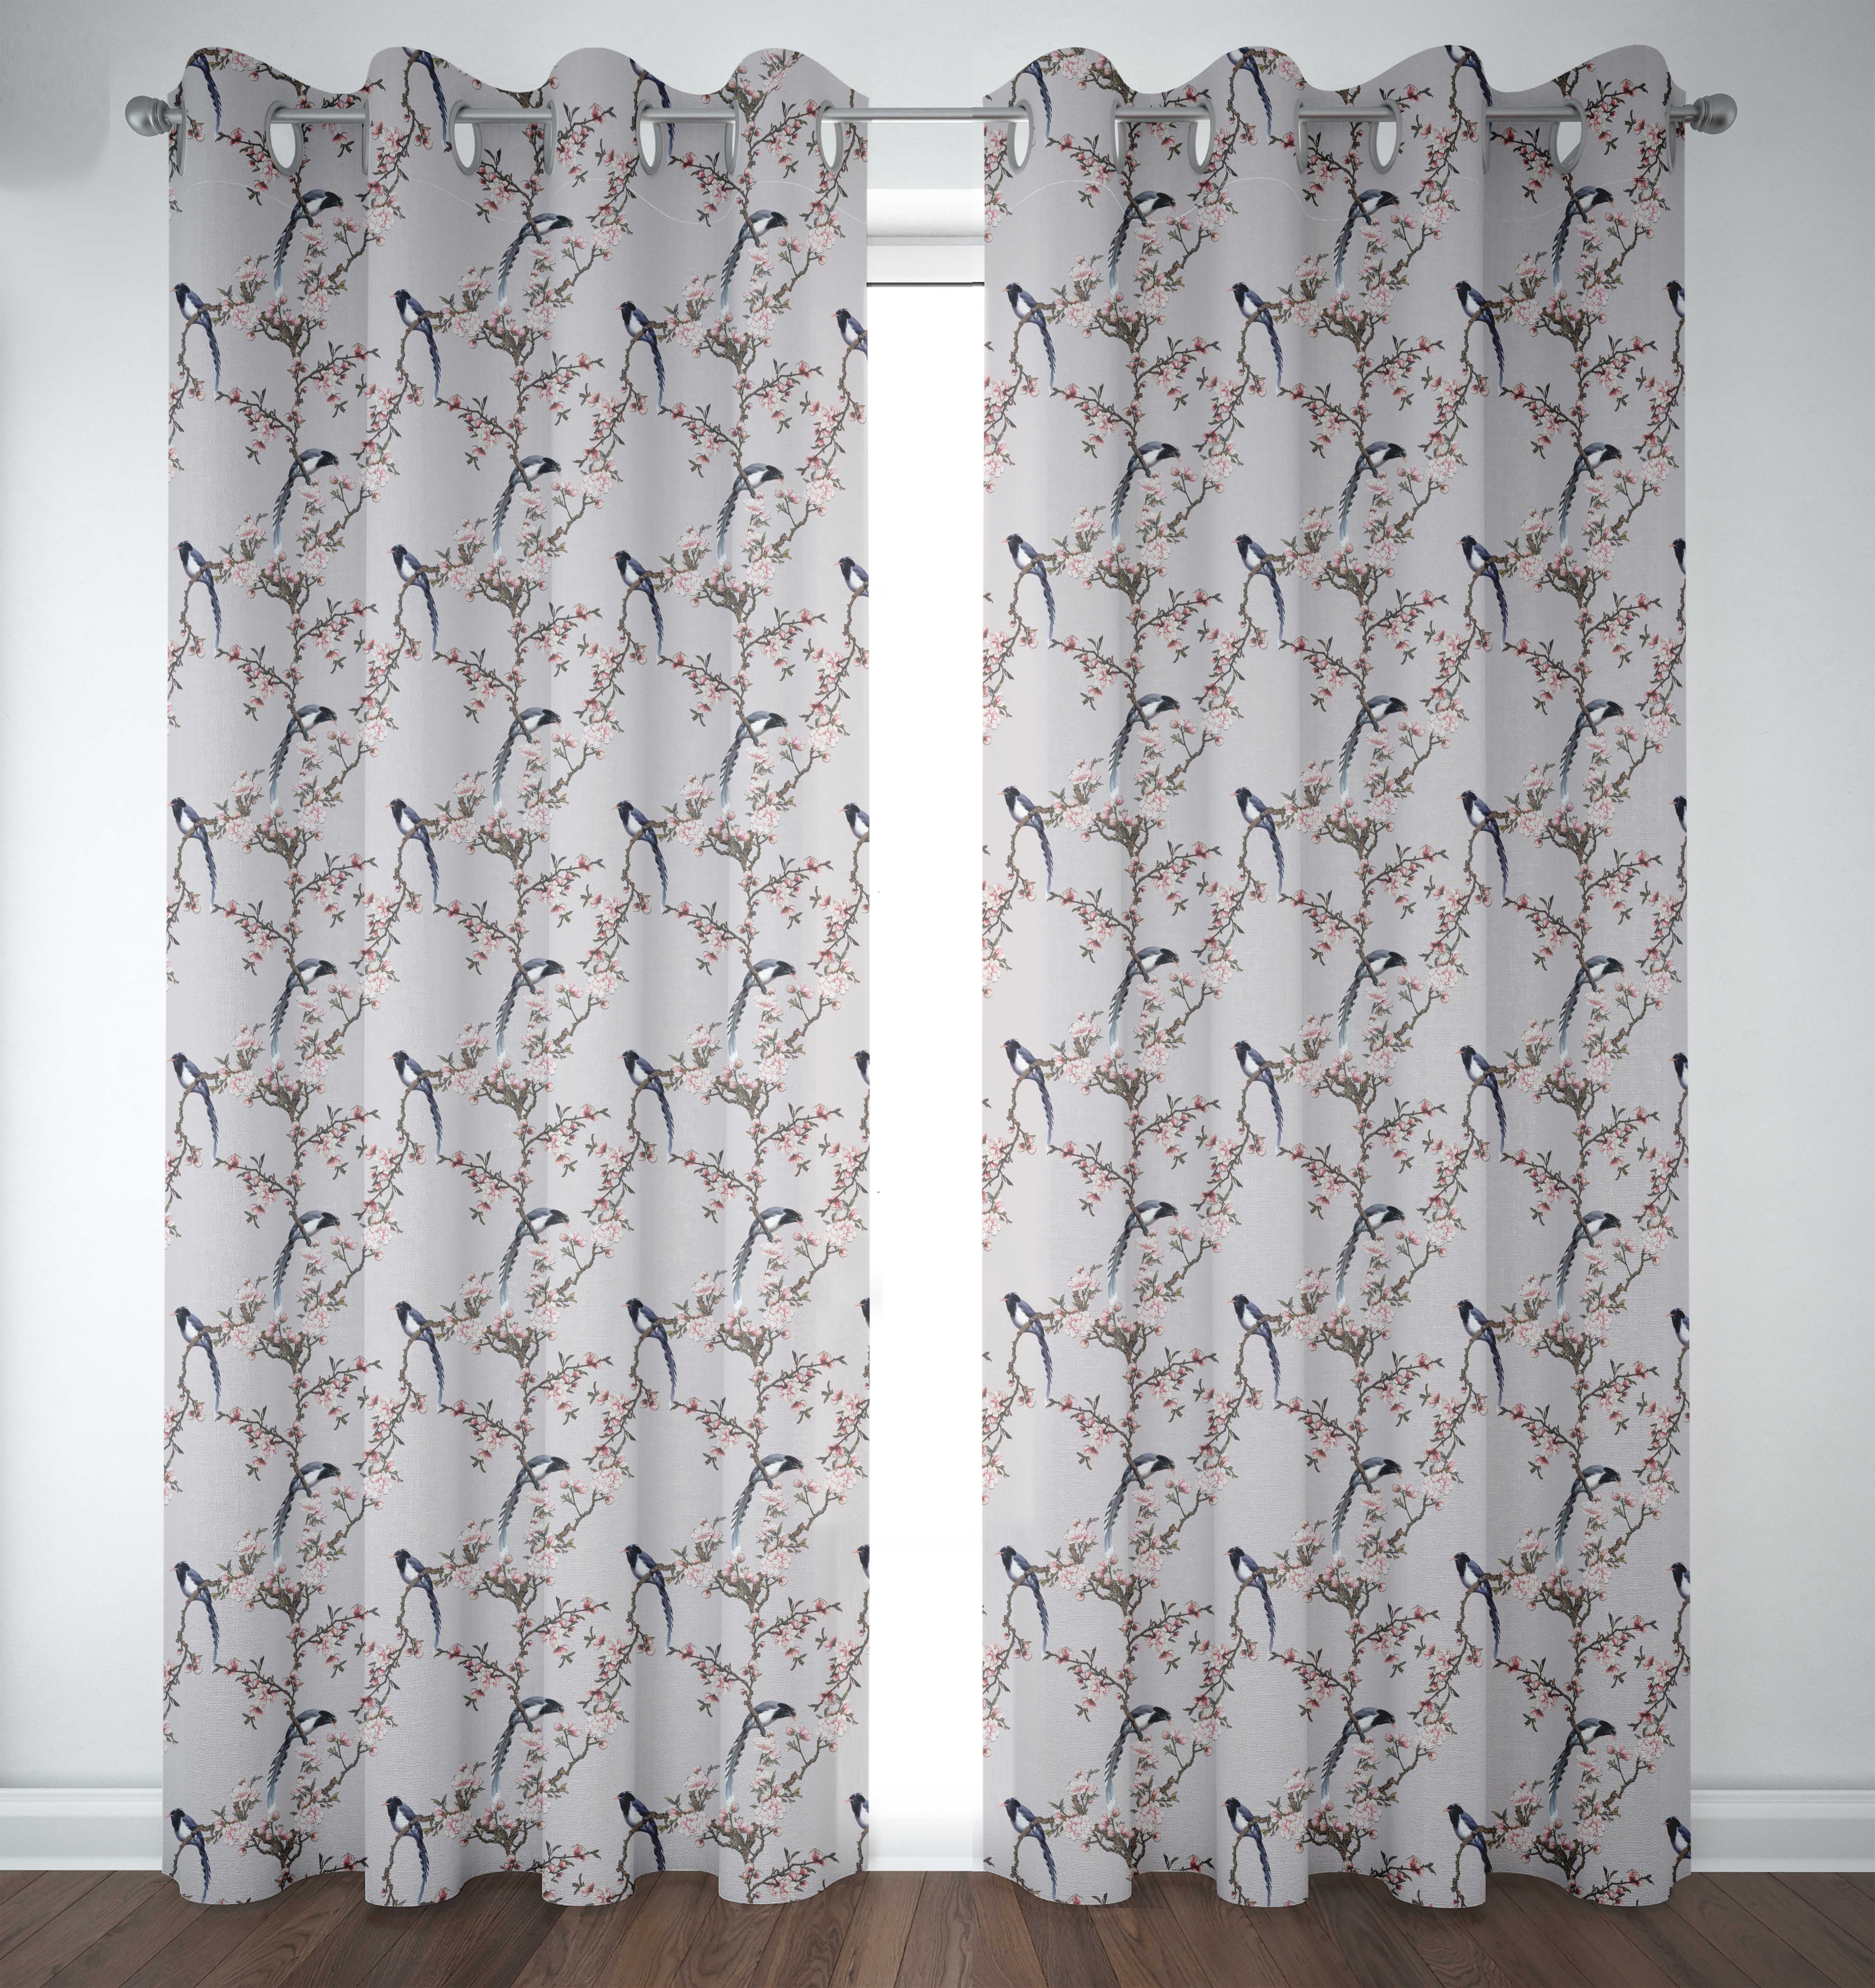 S4sassy Bird Blossom & Paradise Whydah Living Room Eyelet Curtain BRD-522C 